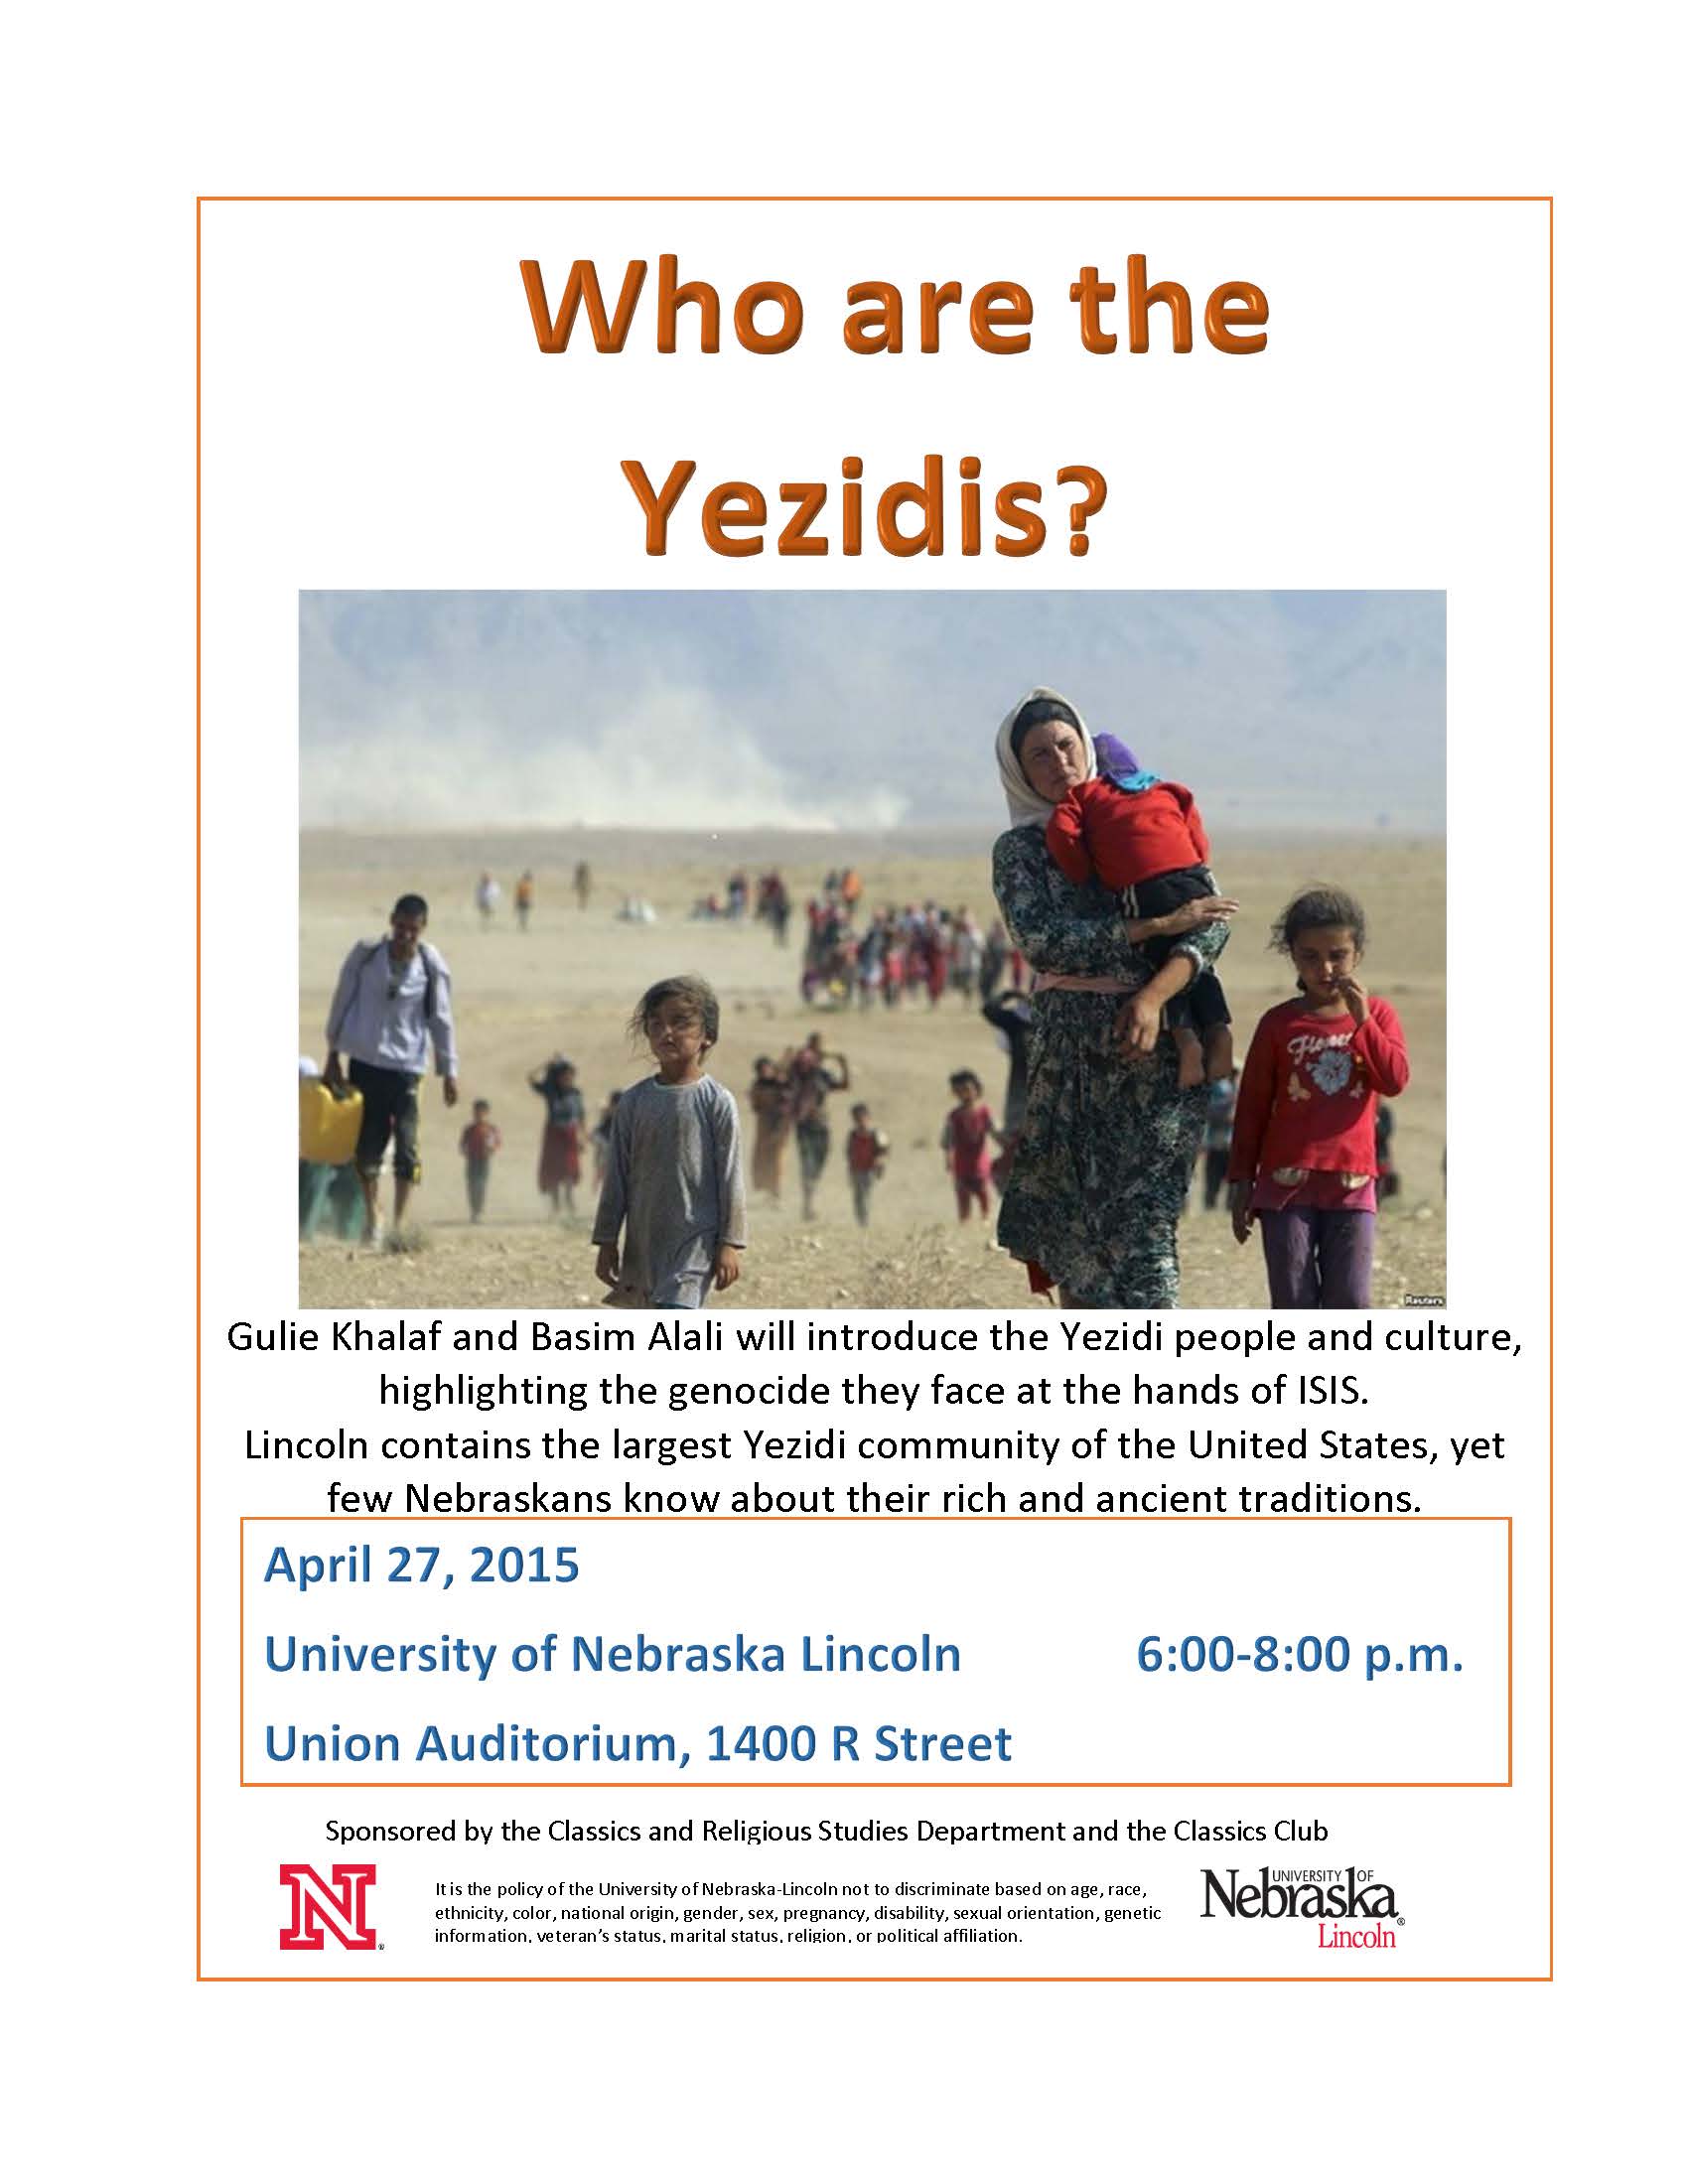 Who are the Yezidis?